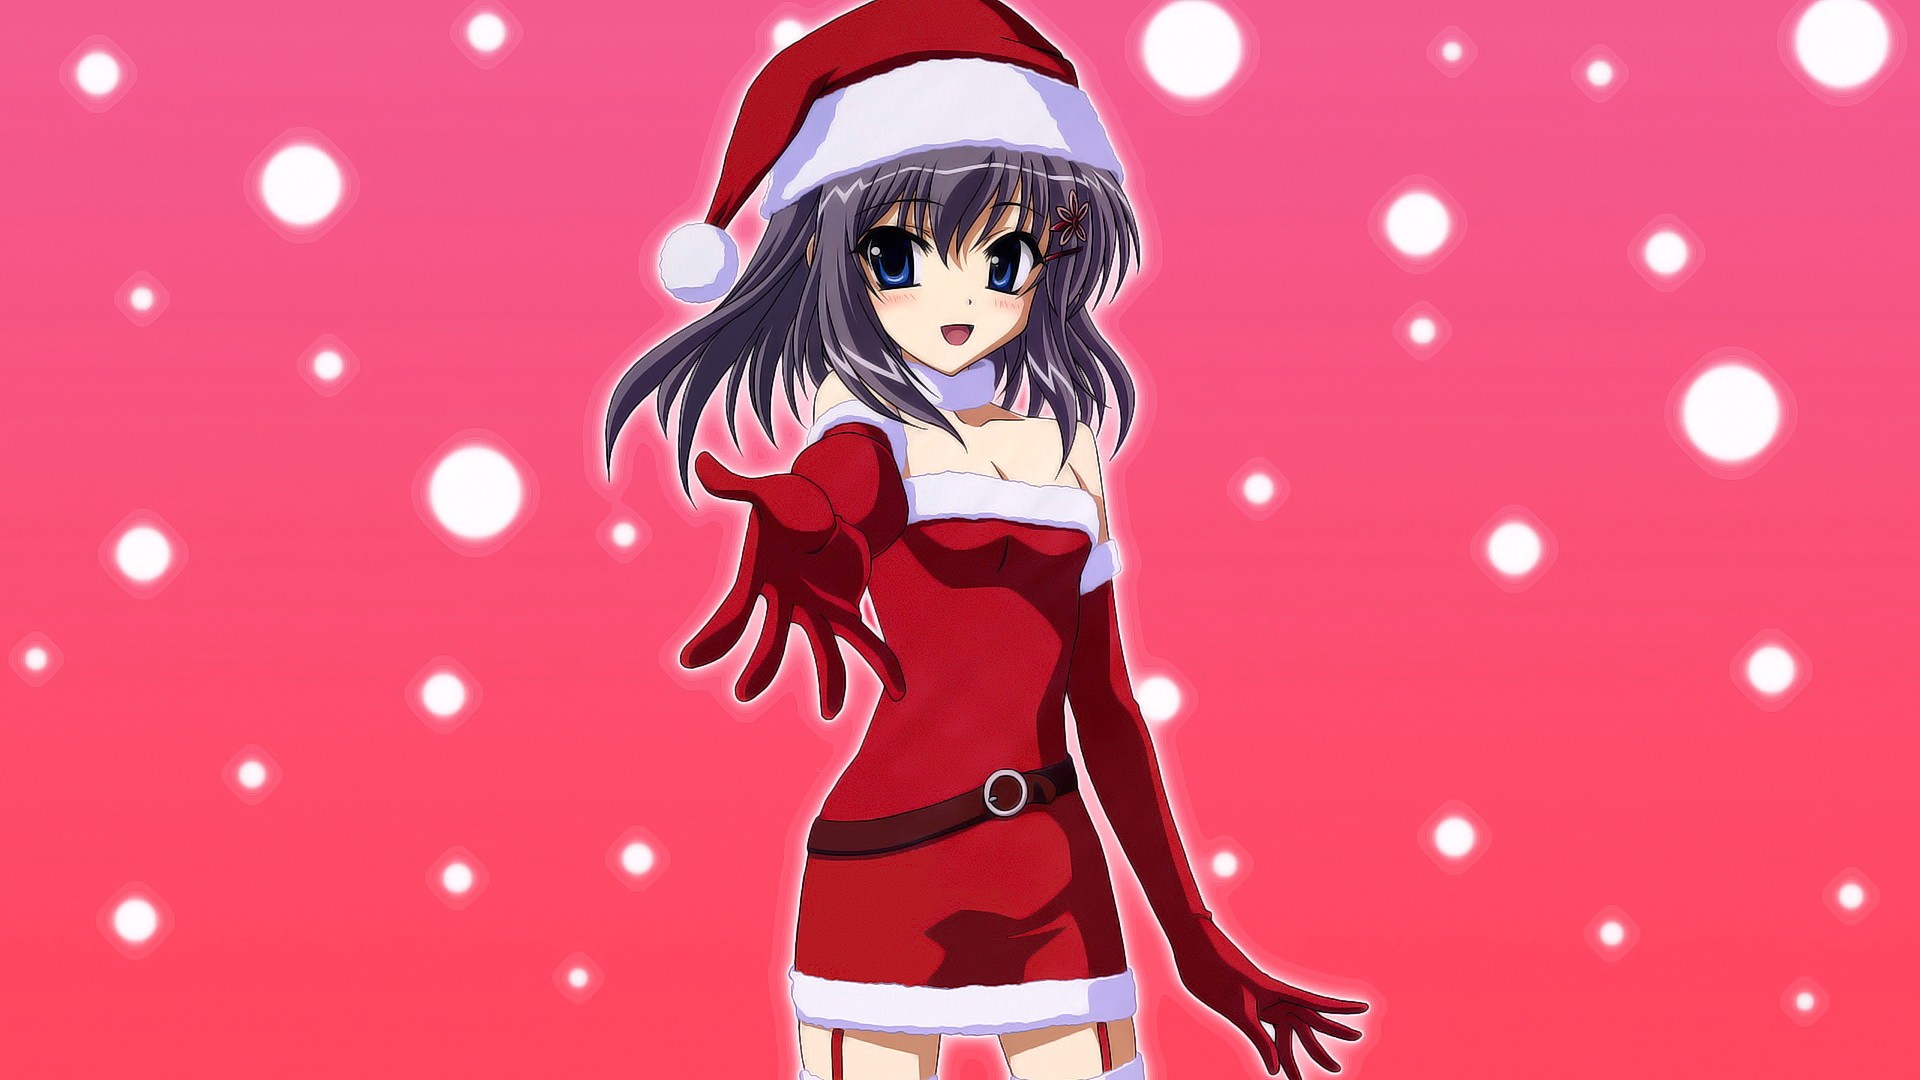 Anime 1920x1080 anime anime girls Katagiri Yuuhi hat brunette long hair eyes Christmas open mouth blue eyes pink background Santa hats Santa costume